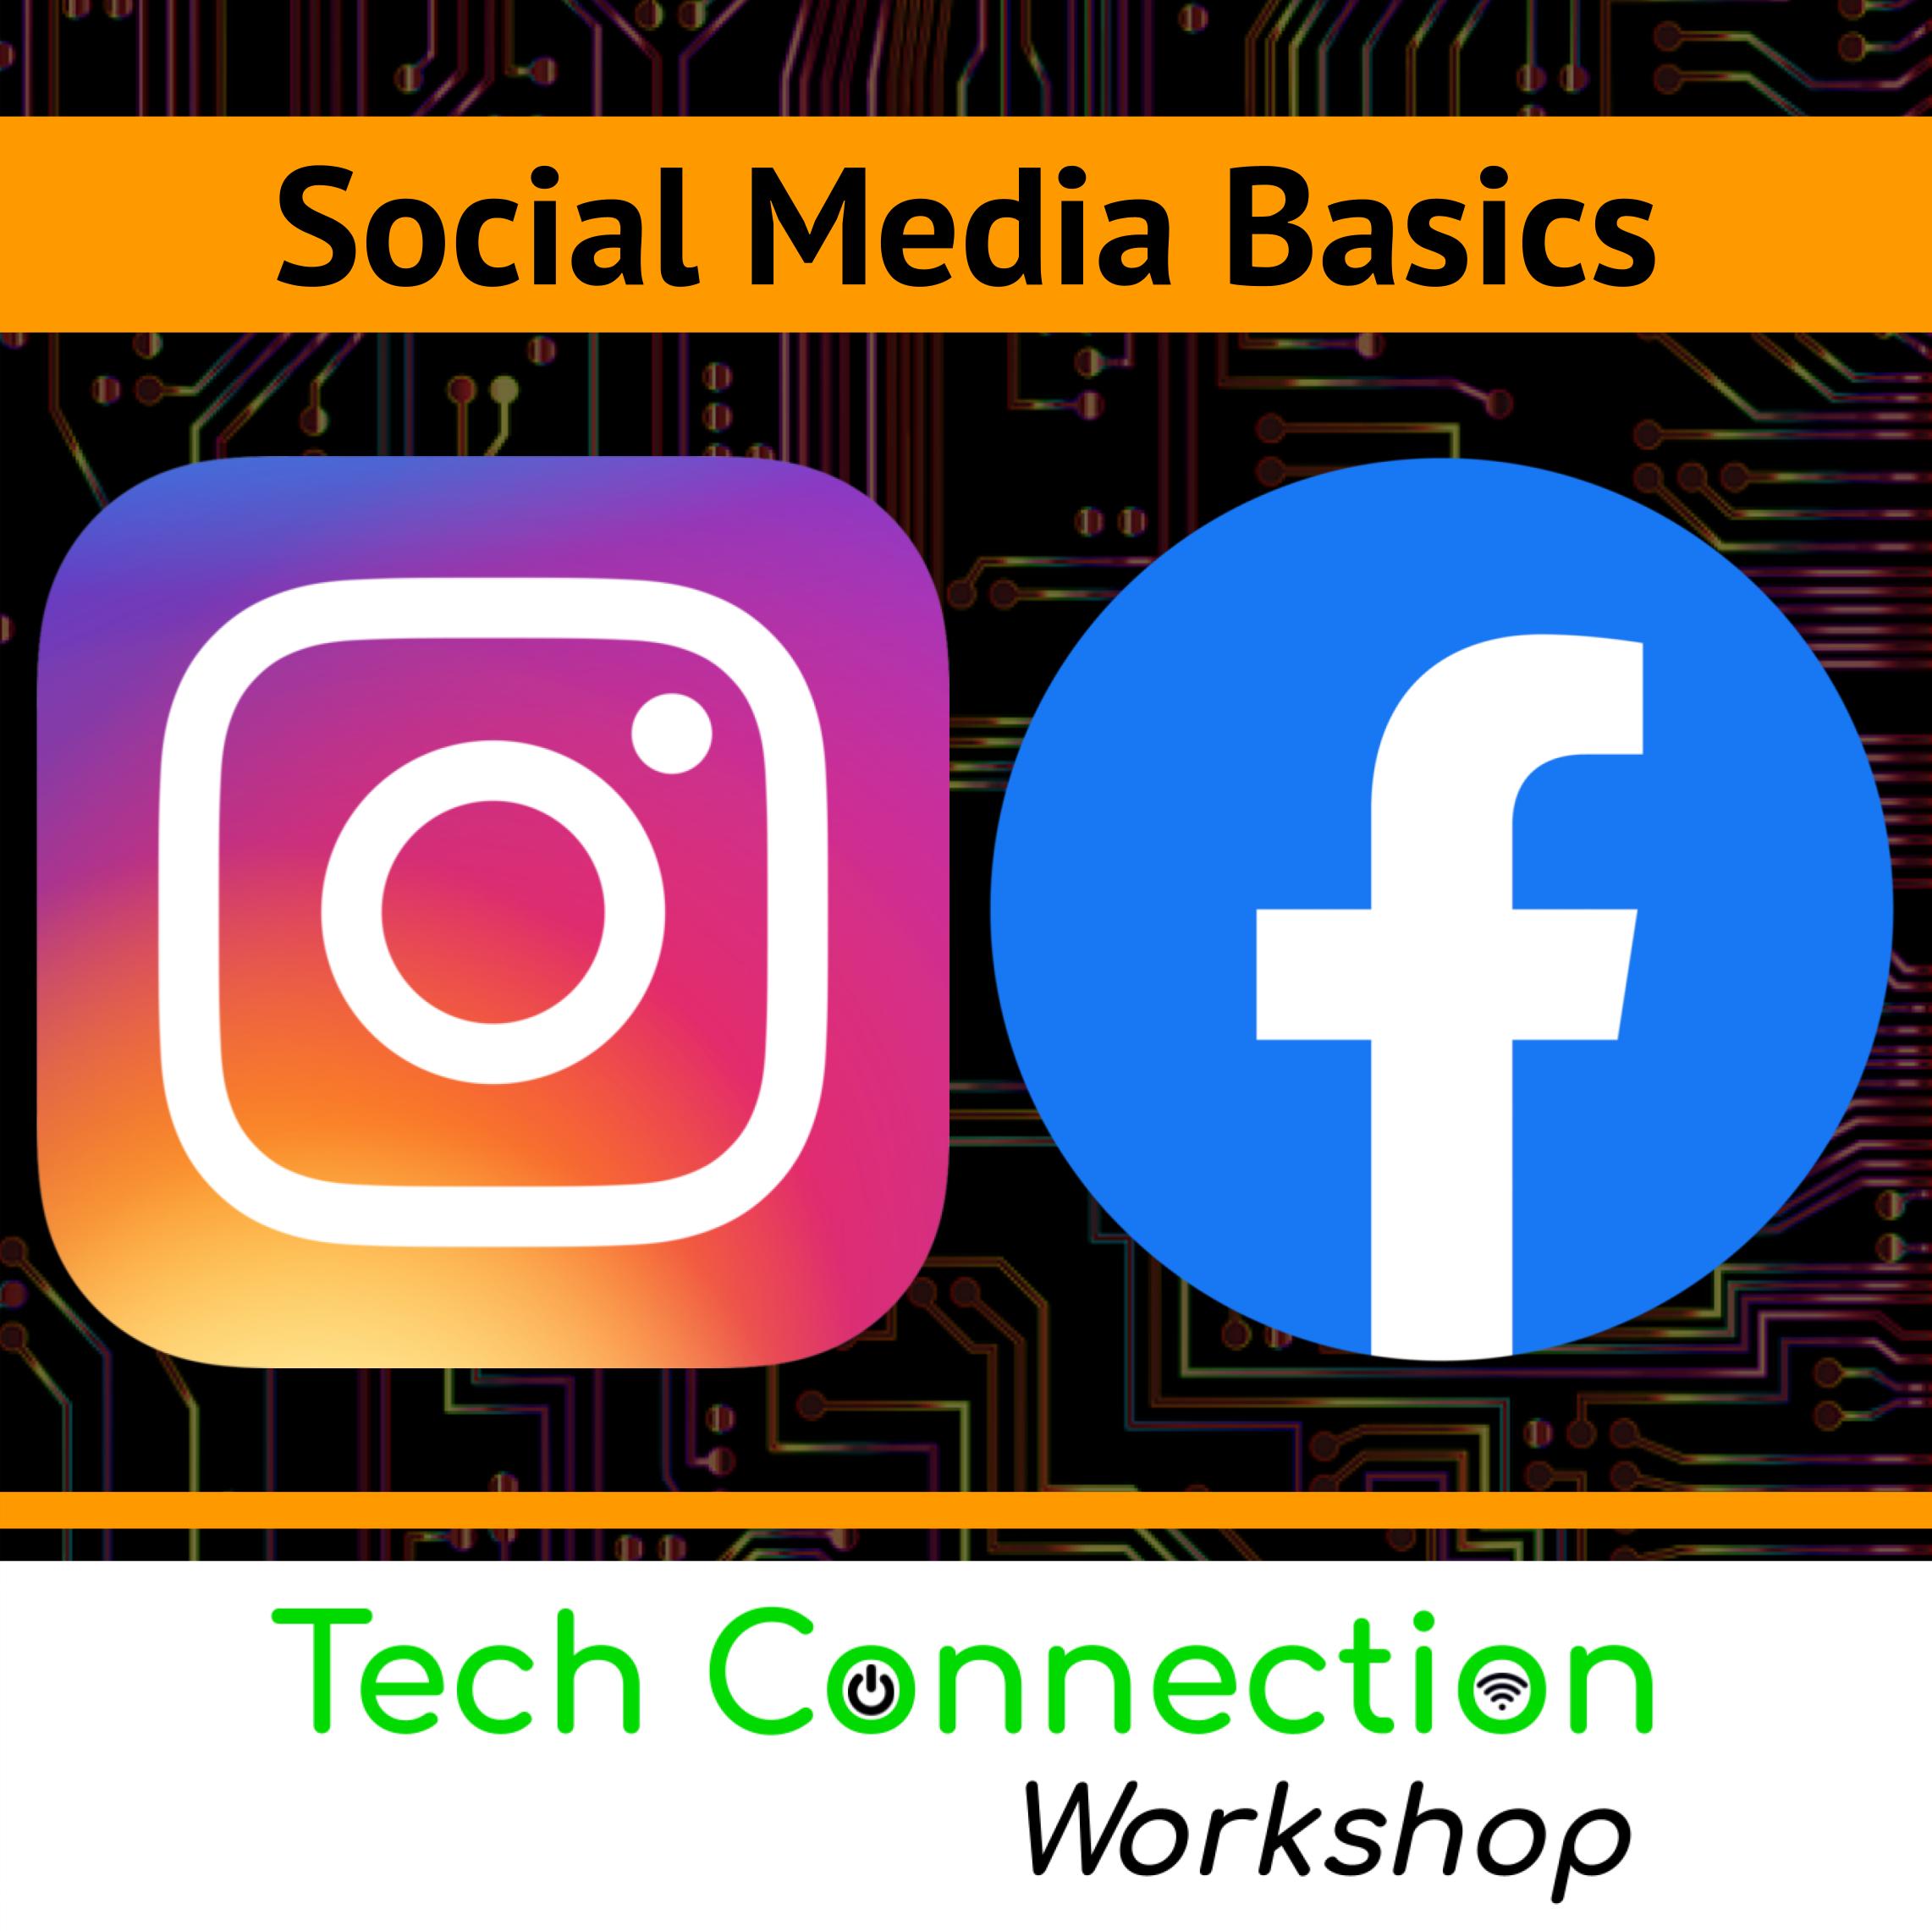 Tech Connection Workshop: Social Media Basics